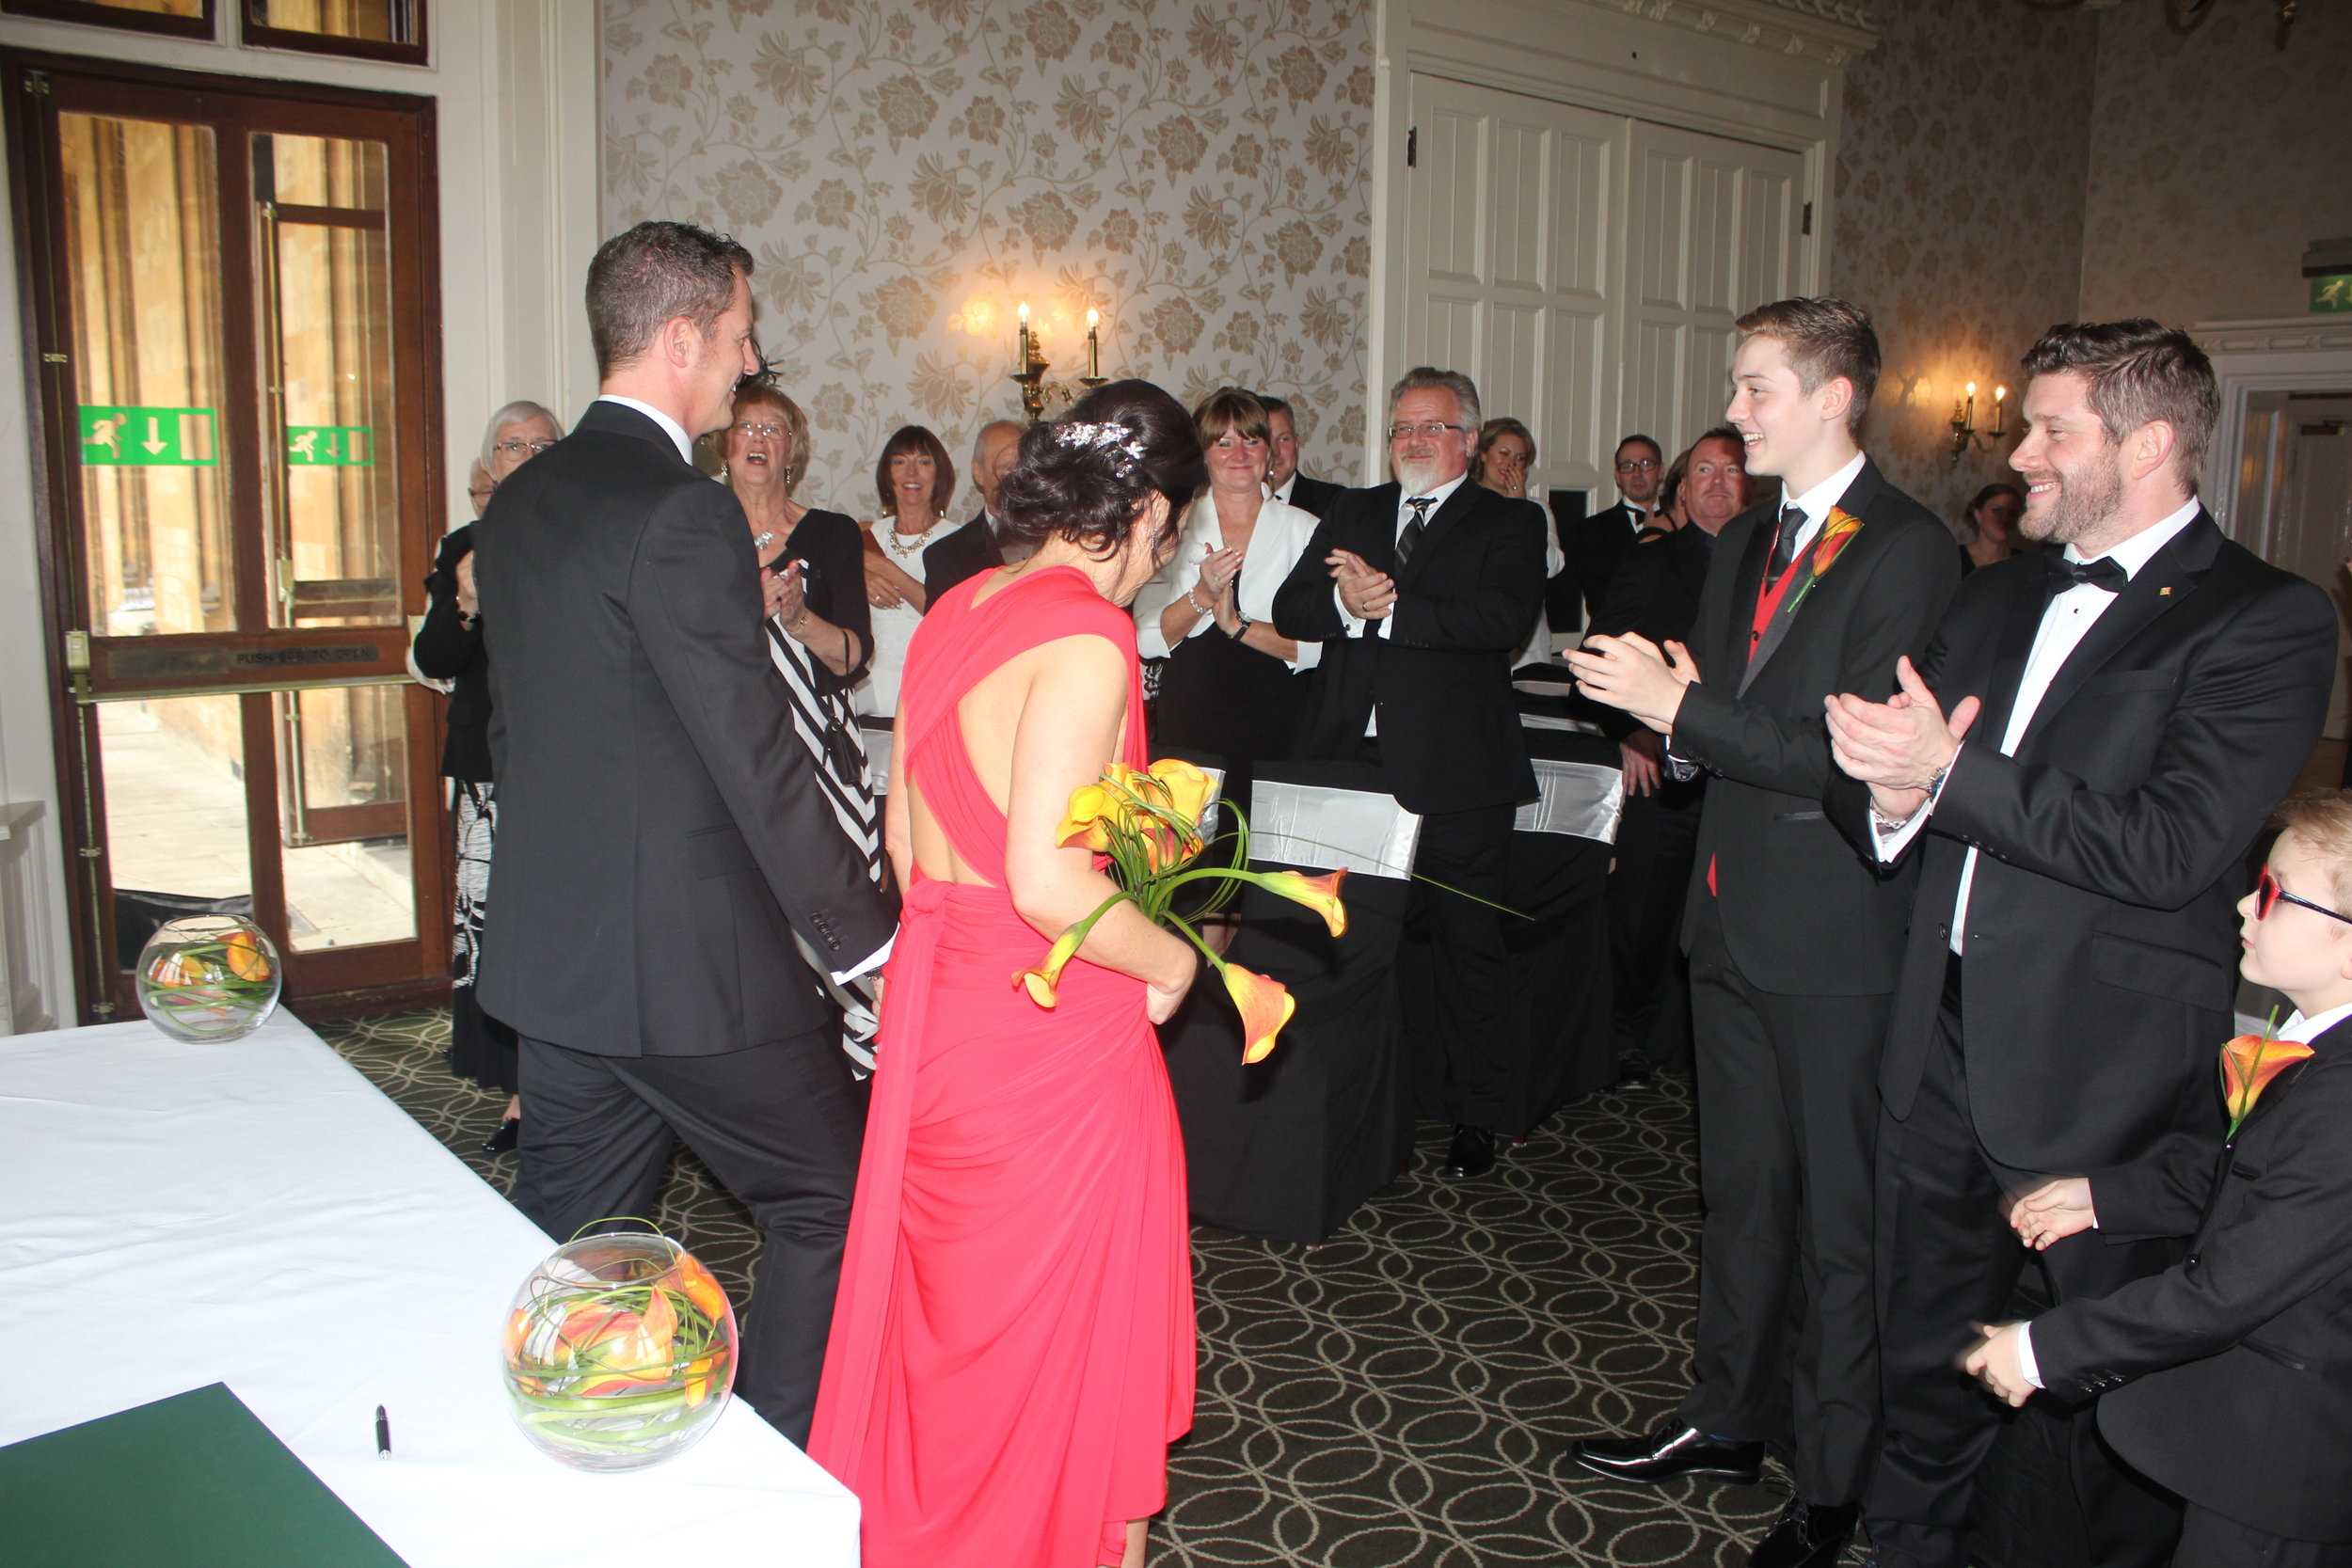 My Perfect Ceremony - Wedding Celebrant Testimonial - Alistair & Amanda